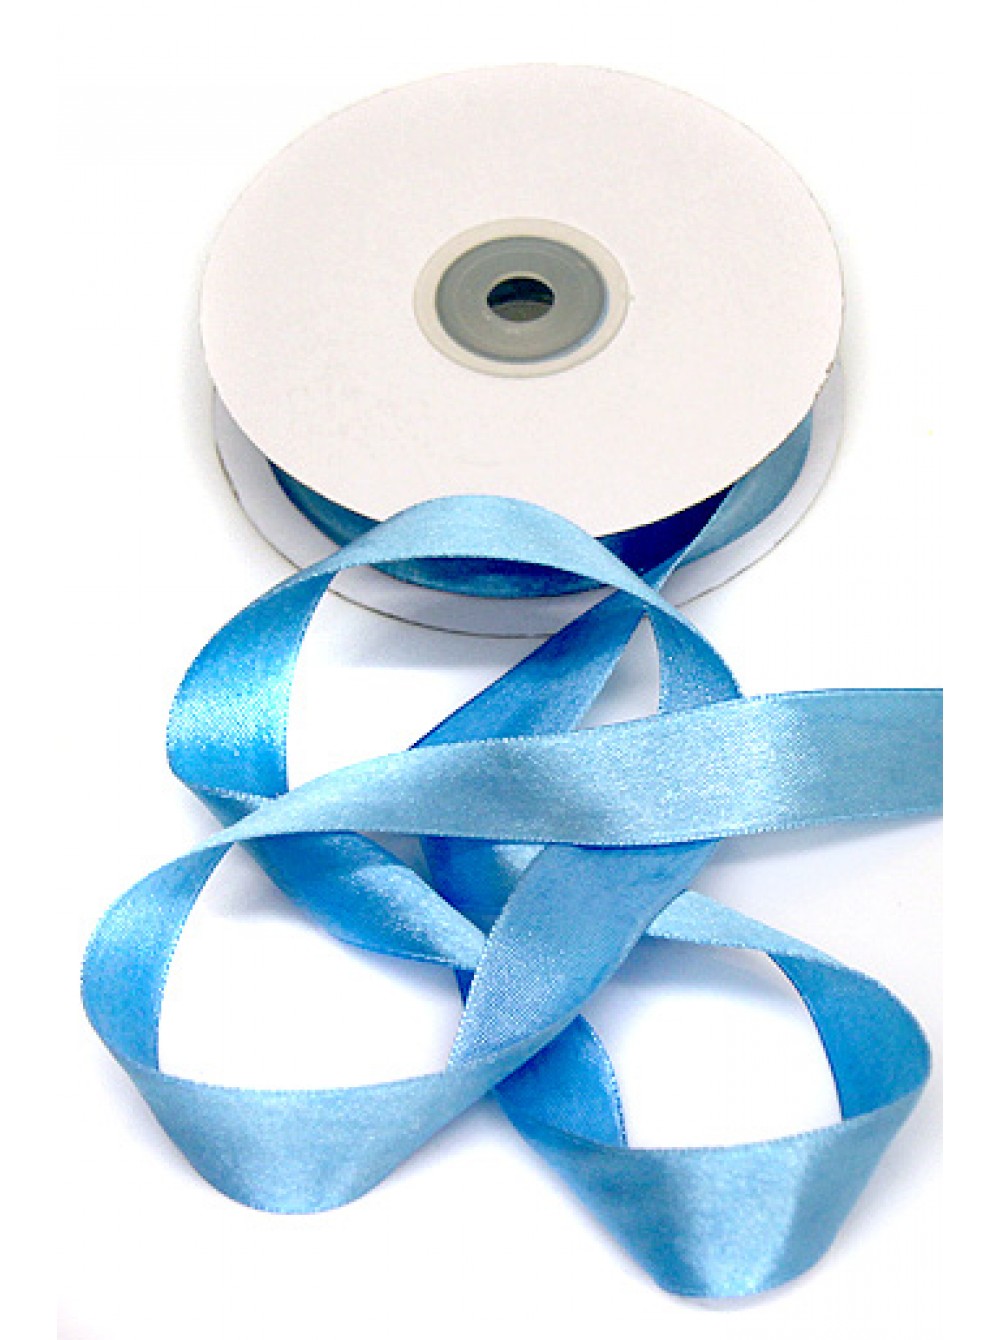 Лента атласная 1,2 см. Лента атласная 25мм рулон уп33м цв.голубой. Упаковка для цветов атласная лента. Синяя атласная лента. Лента атласная 4 см купить